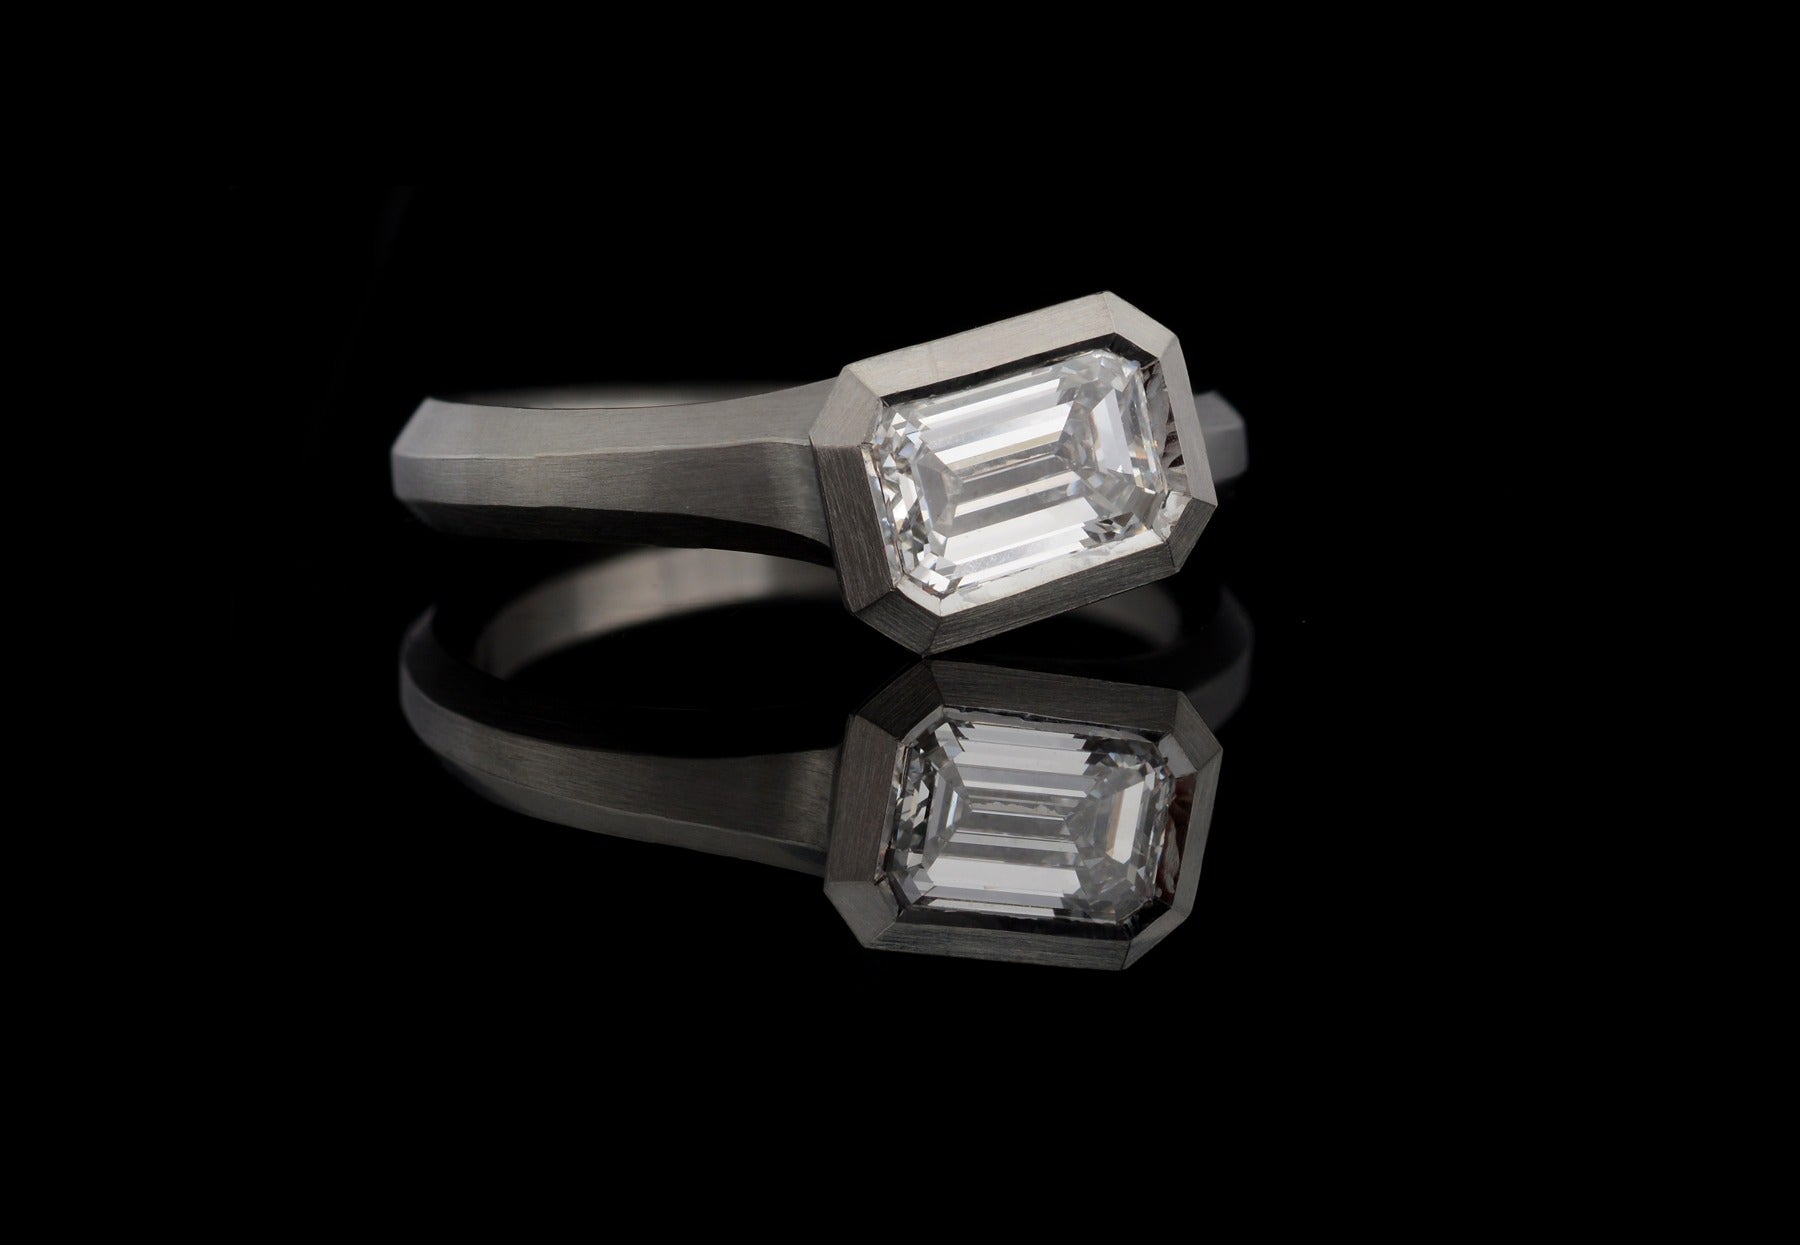 Arris platinum engagement ring with white emerald cut diamond